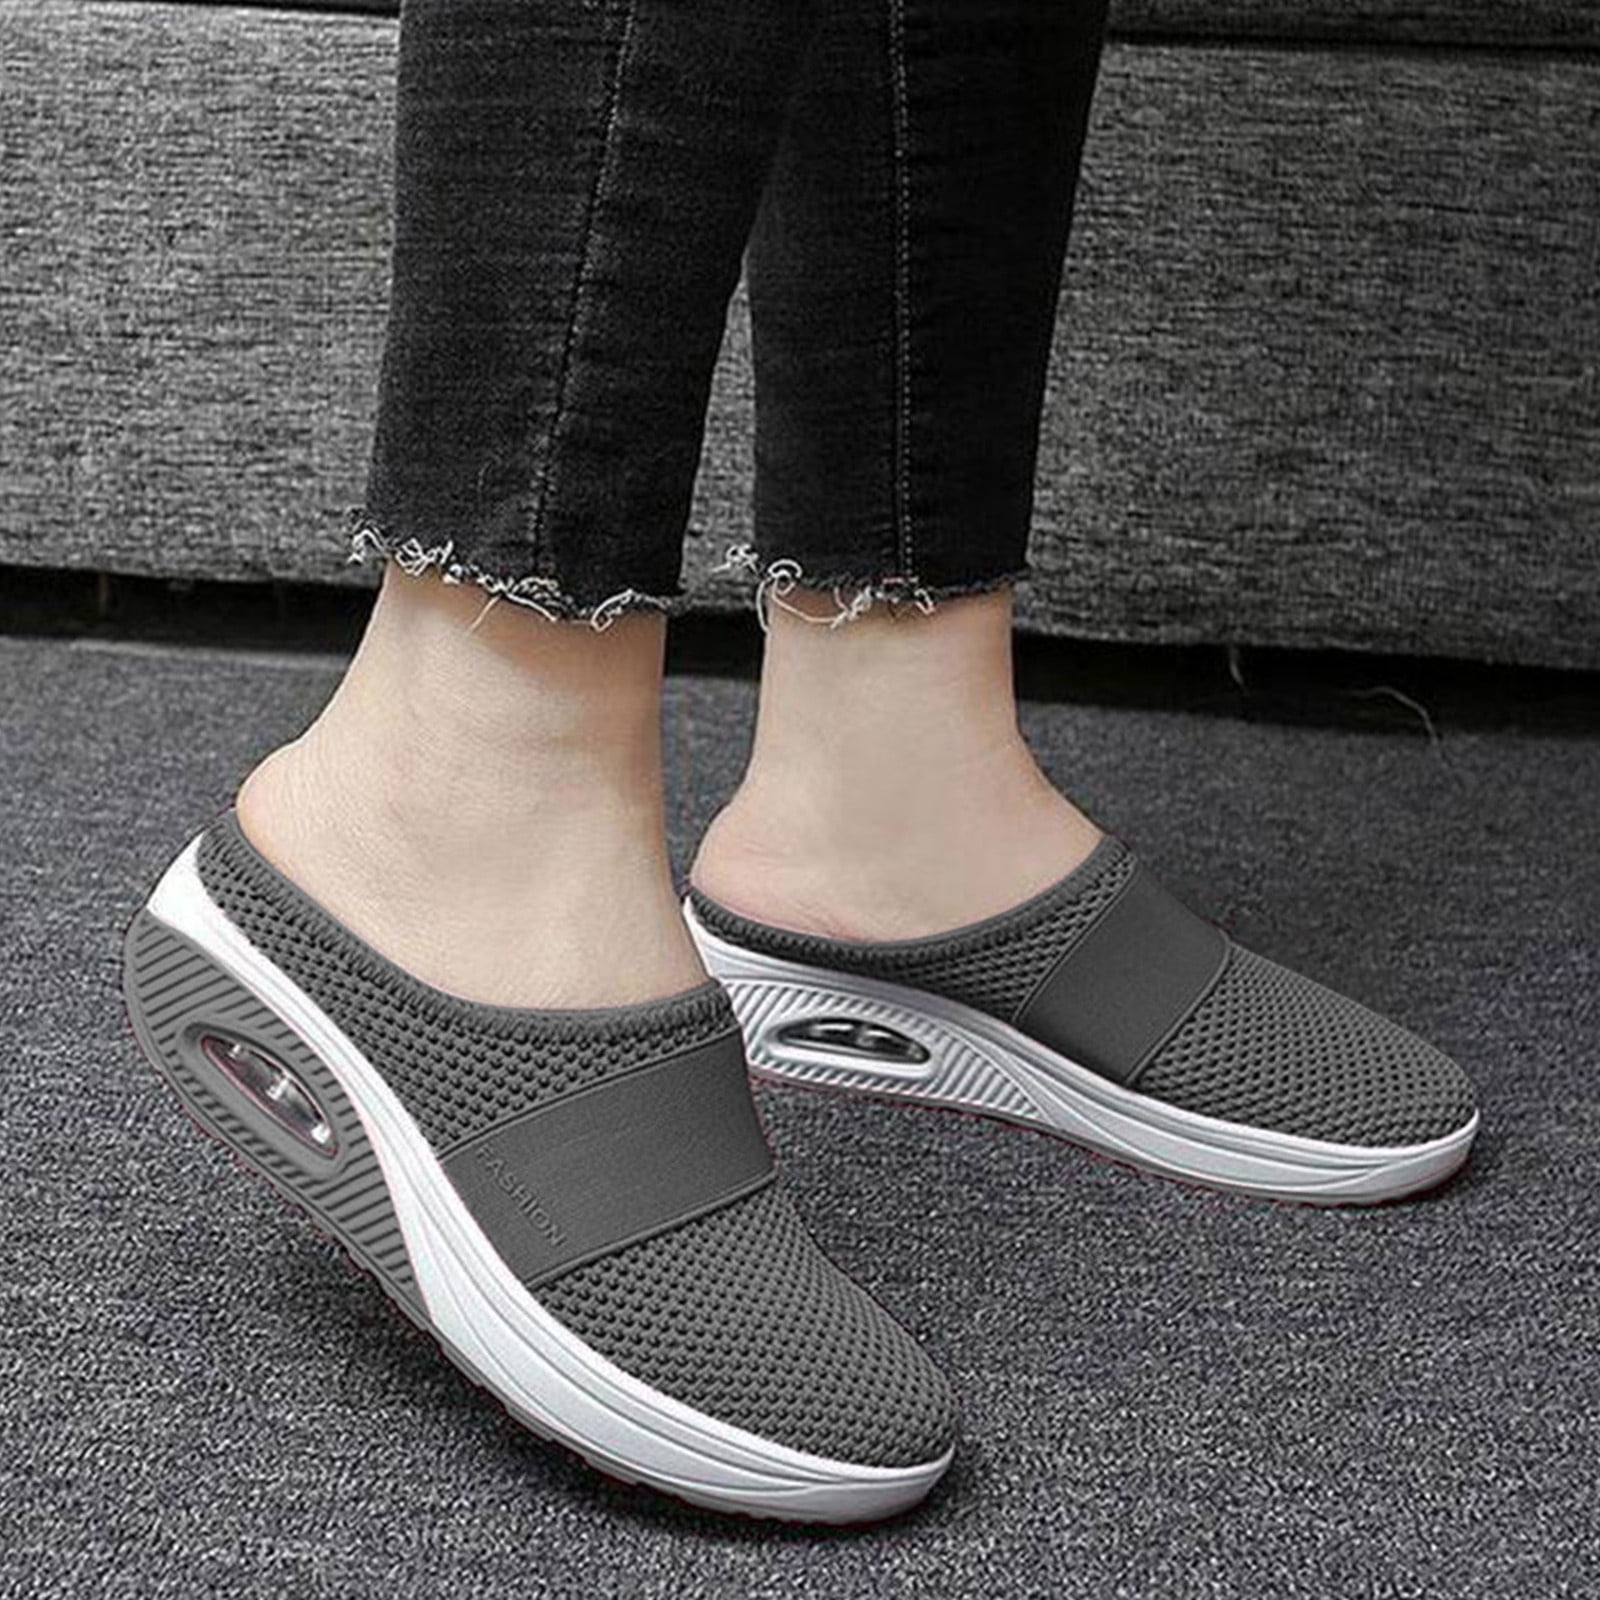 Women's Walking Shoes Sock Sneakers Breathable Casual Air Cushion Slip On Orthopedic Diabetic Walking Shoes 